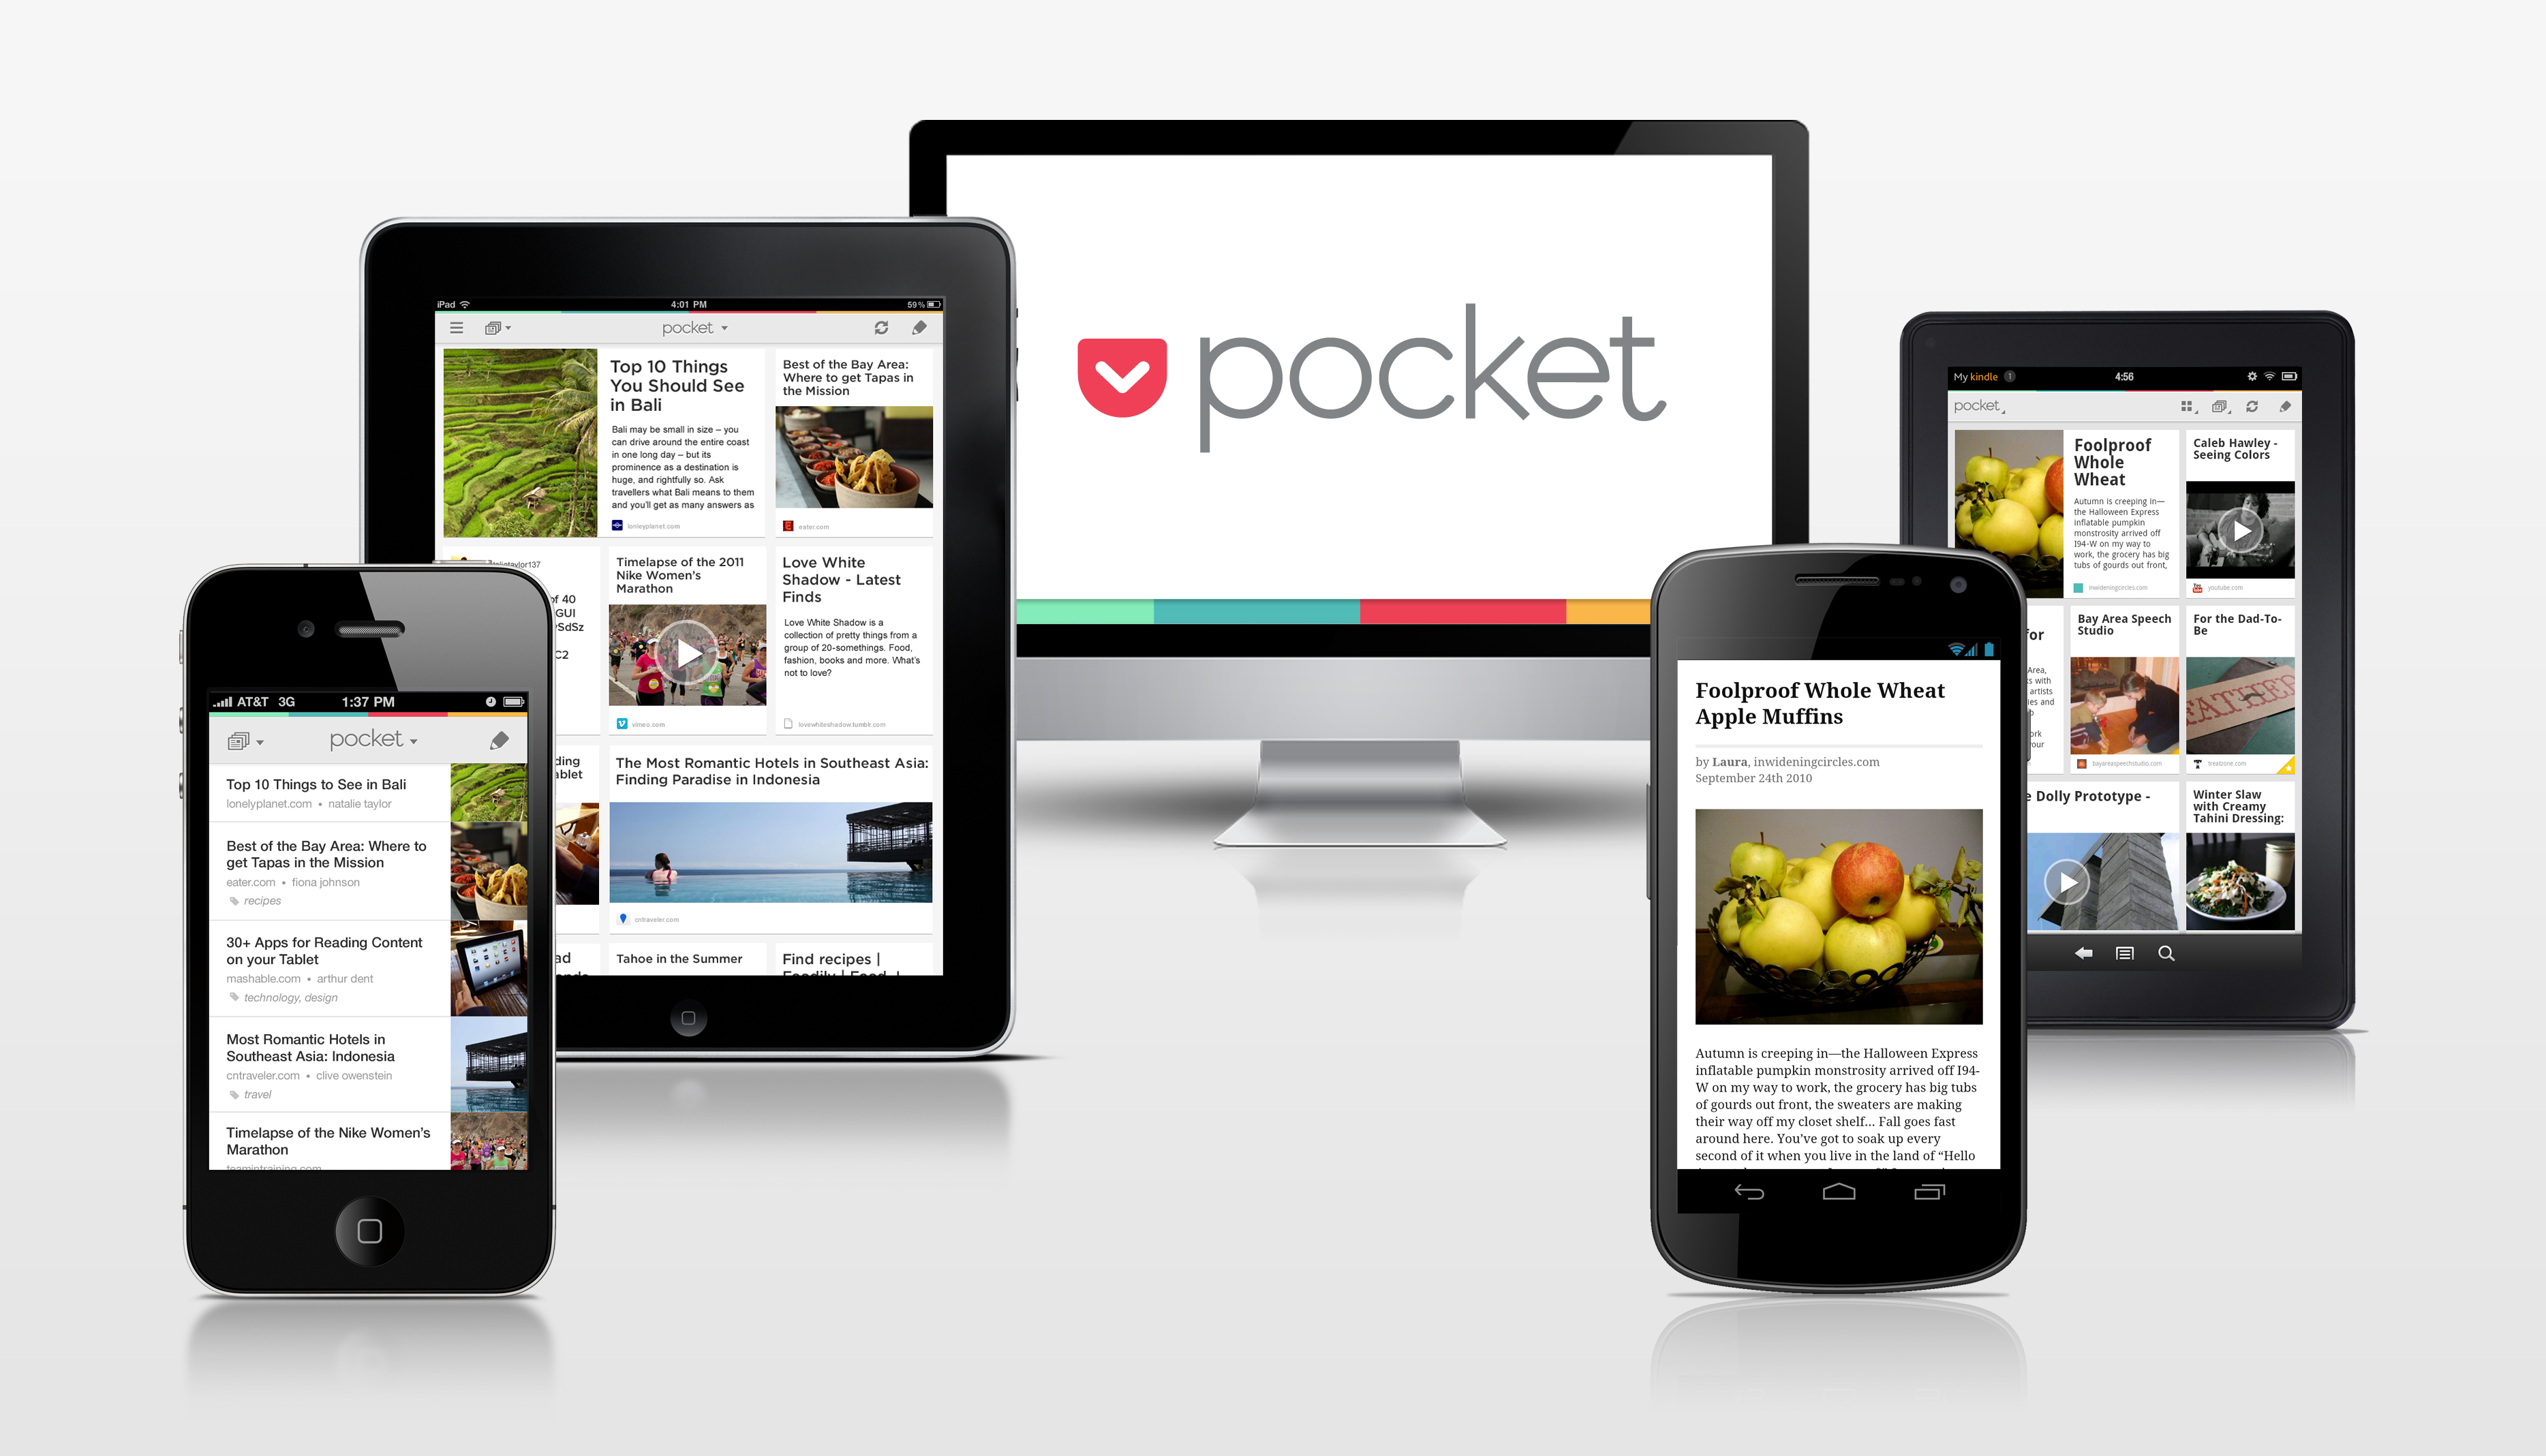 pocket-device-lineup1.jpg